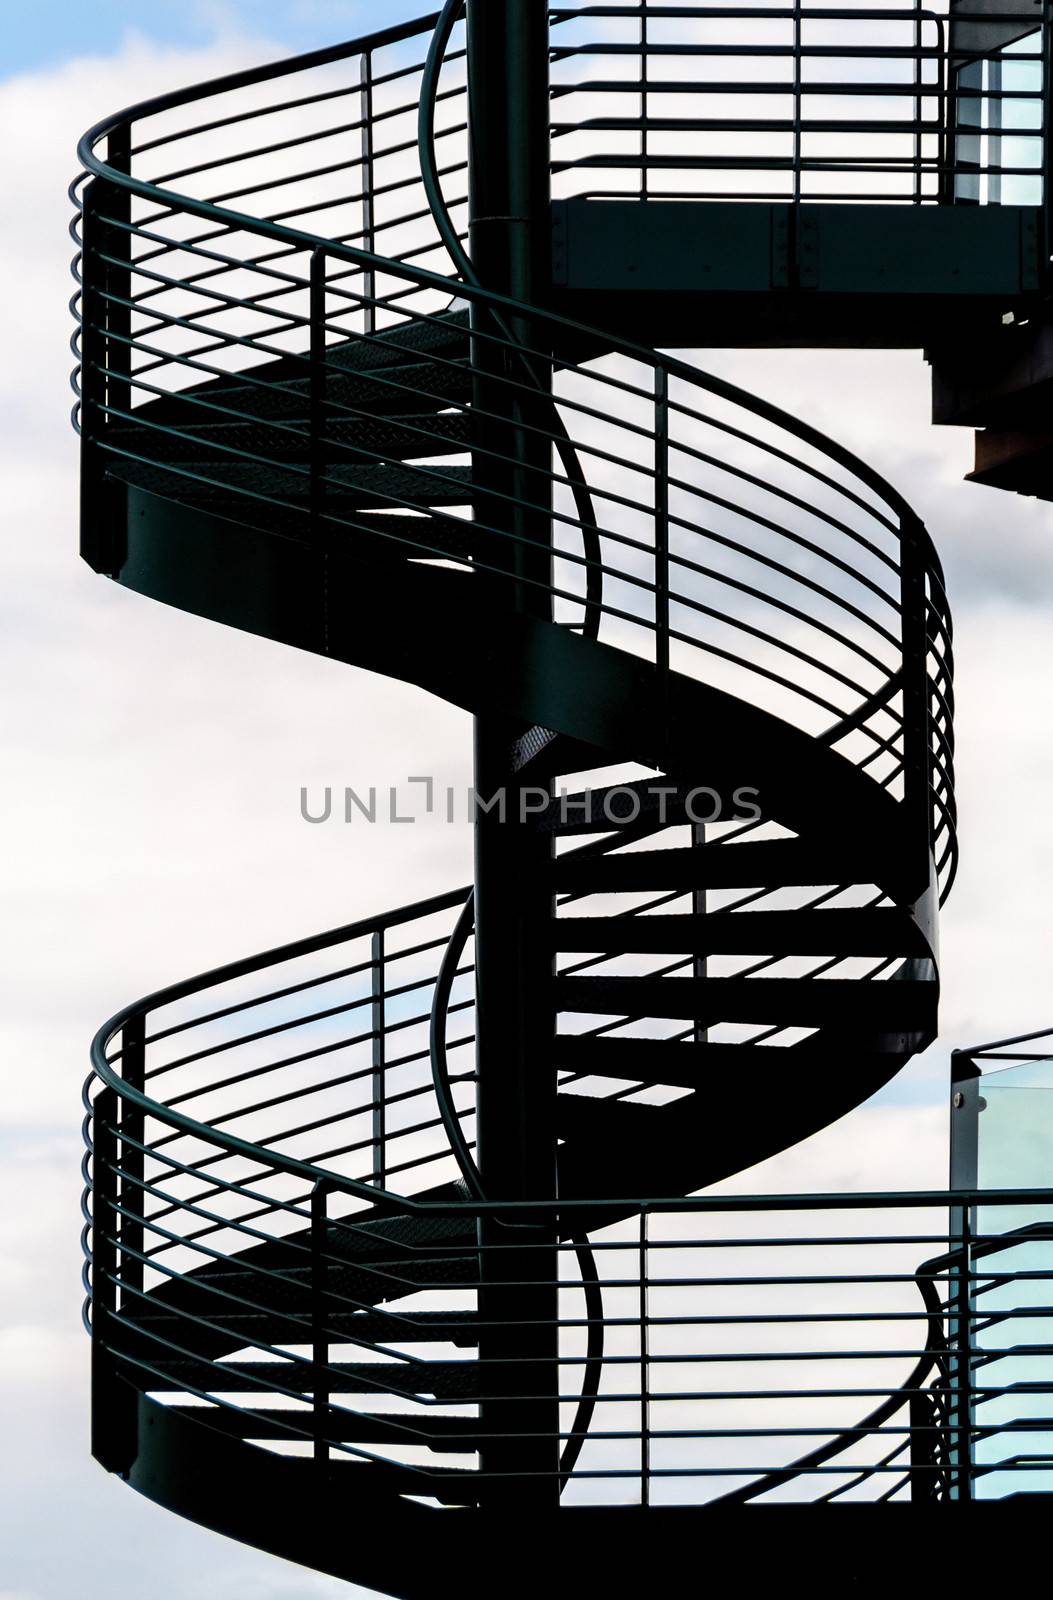 Spiral staircase by dutourdumonde